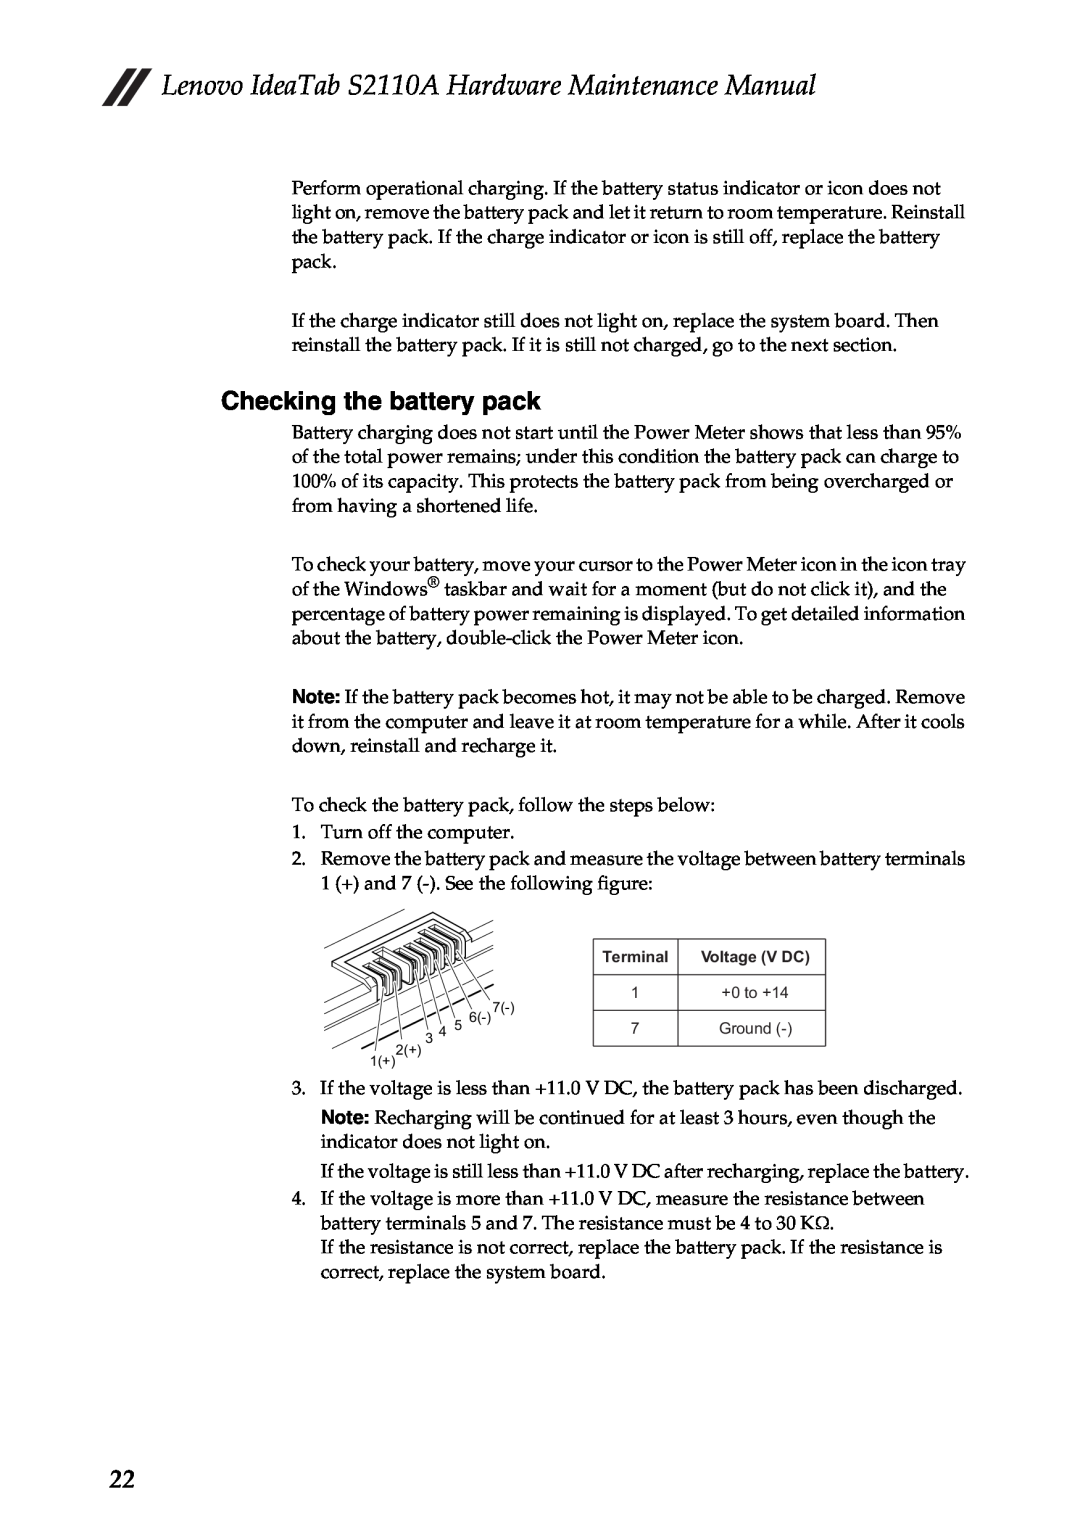 Lenovo manual Checking the battery pack, Lenovo IdeaTab S2110A Hardware Maintenance Manual 